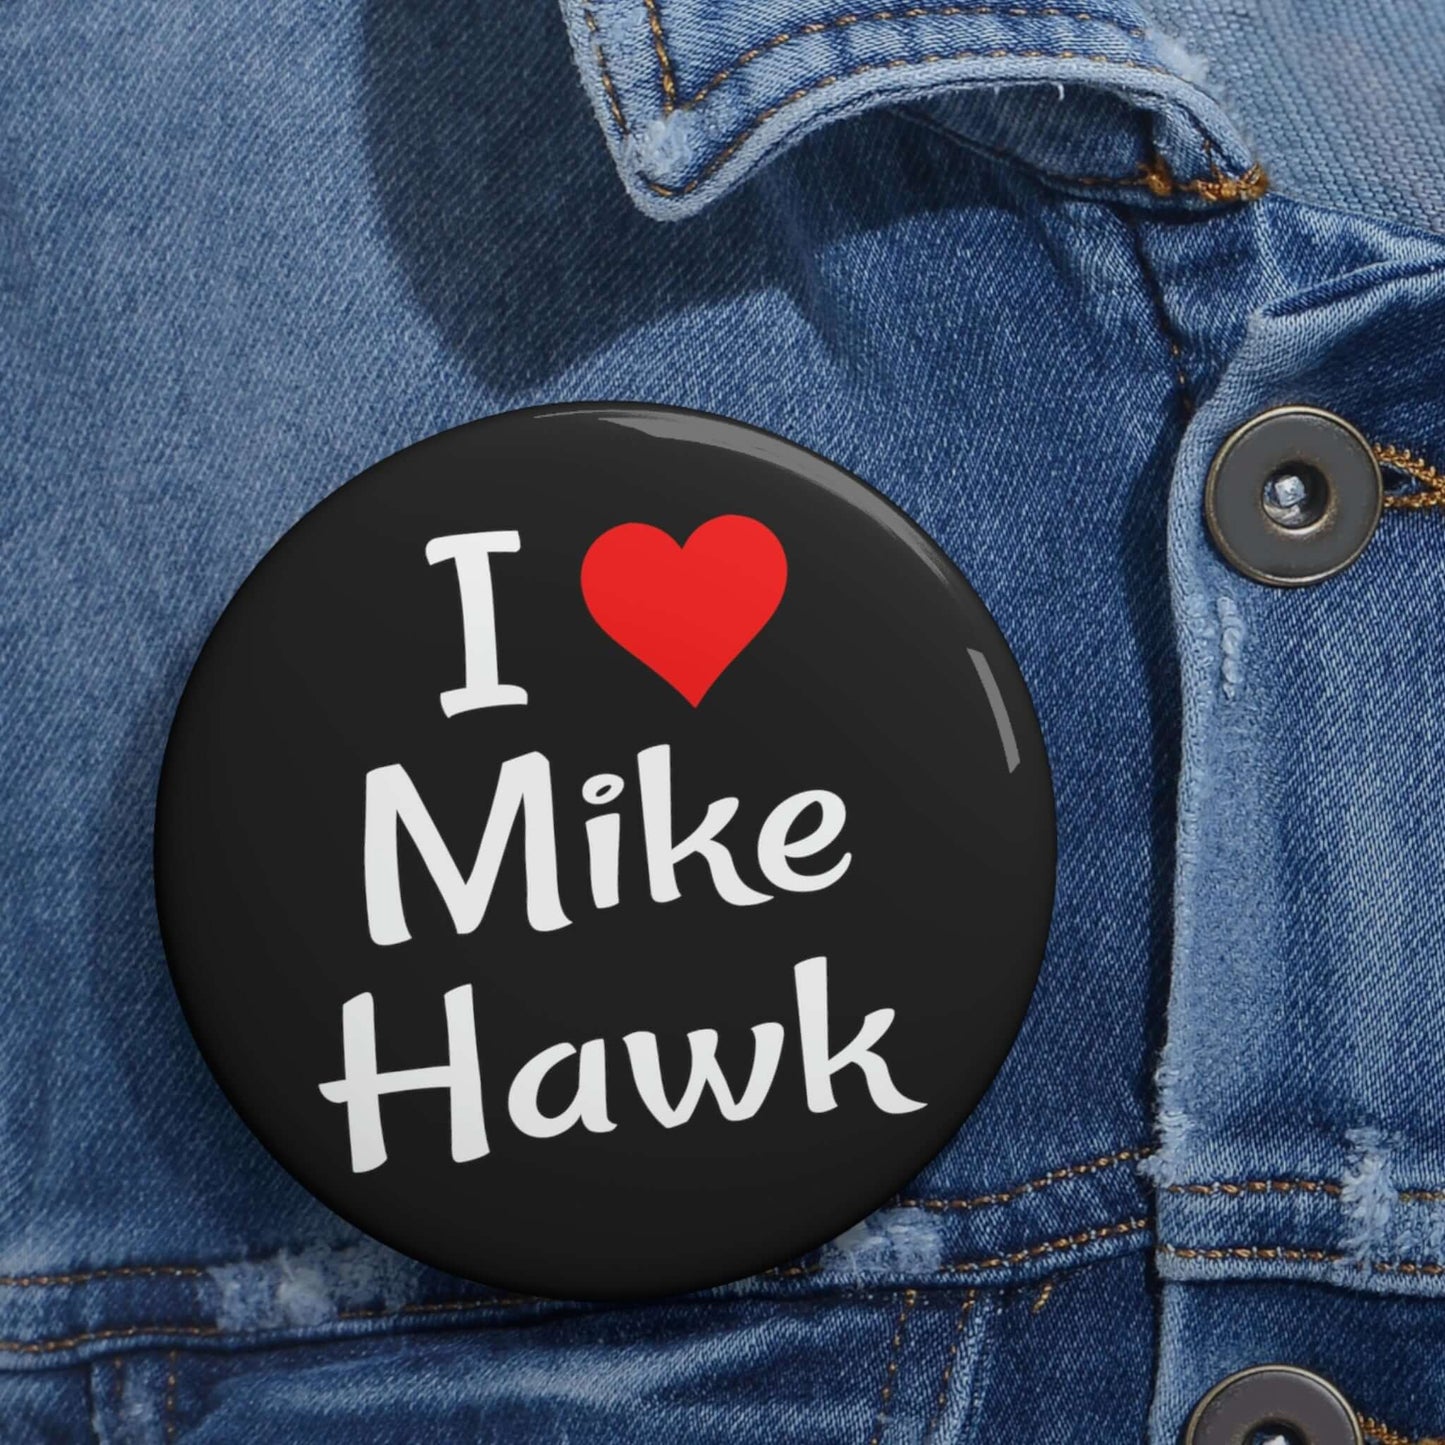 I love Mike Hawk pinback button